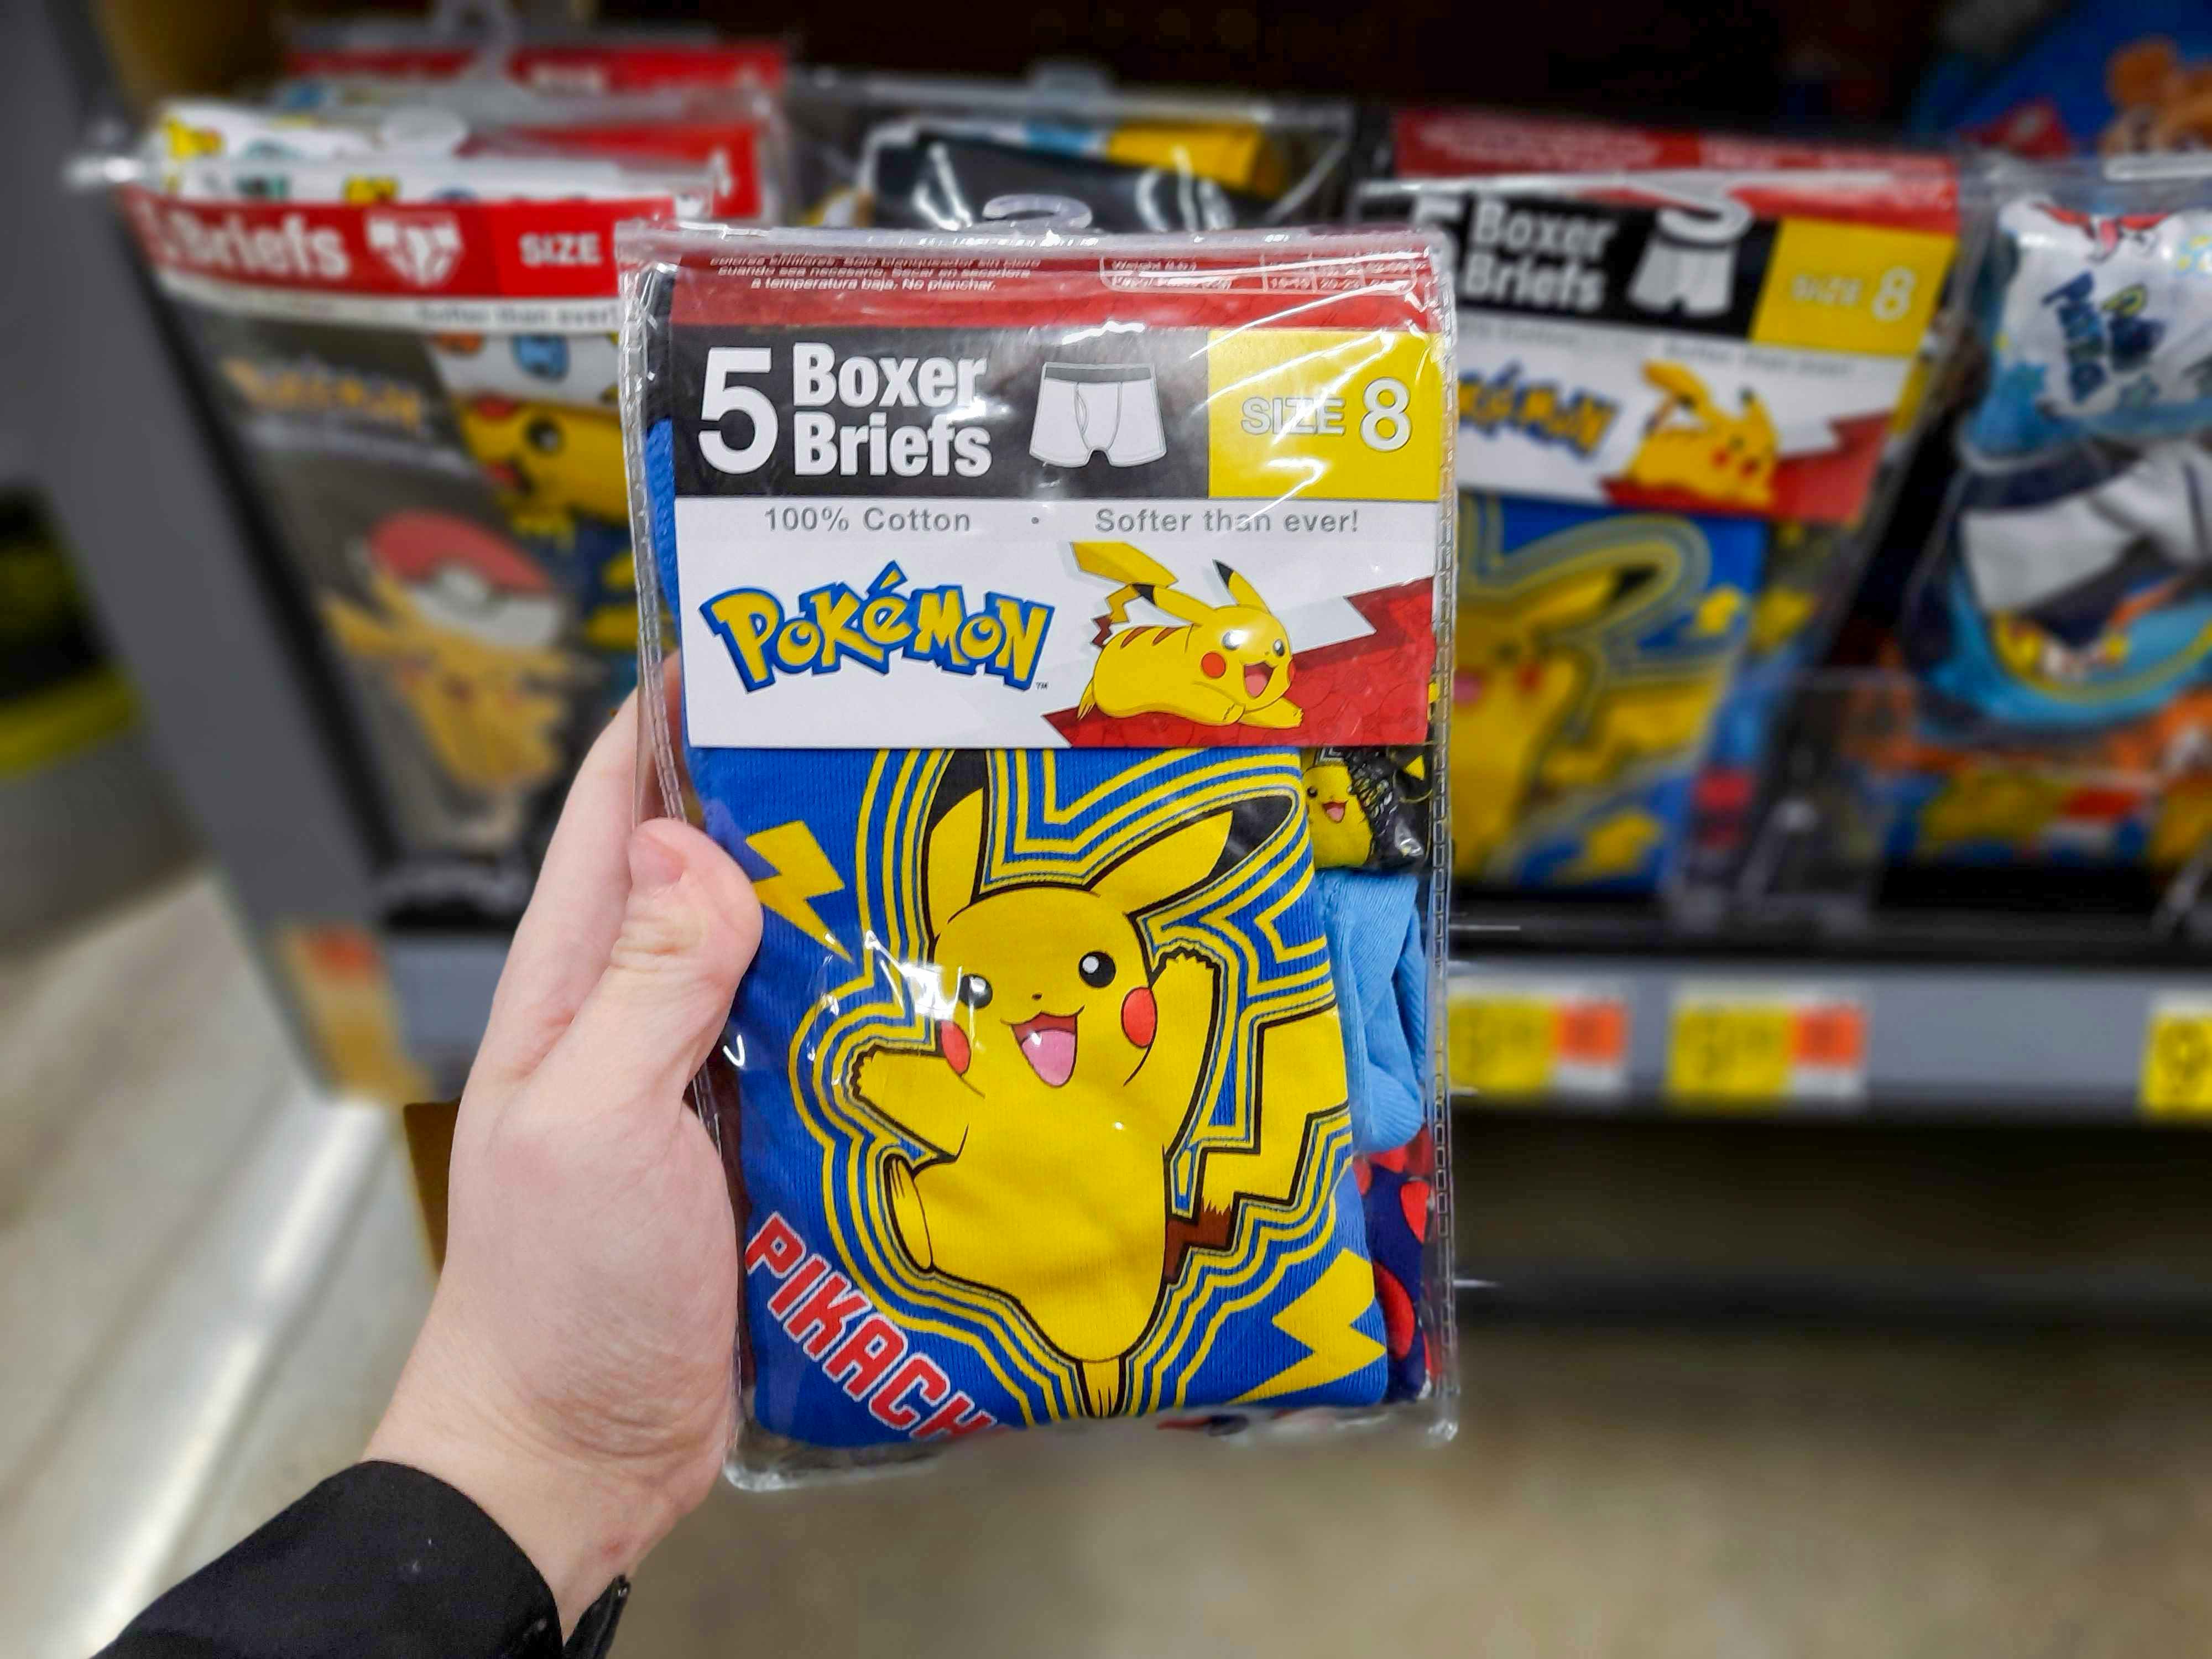 Boys' Pokemon underwear at Walmart